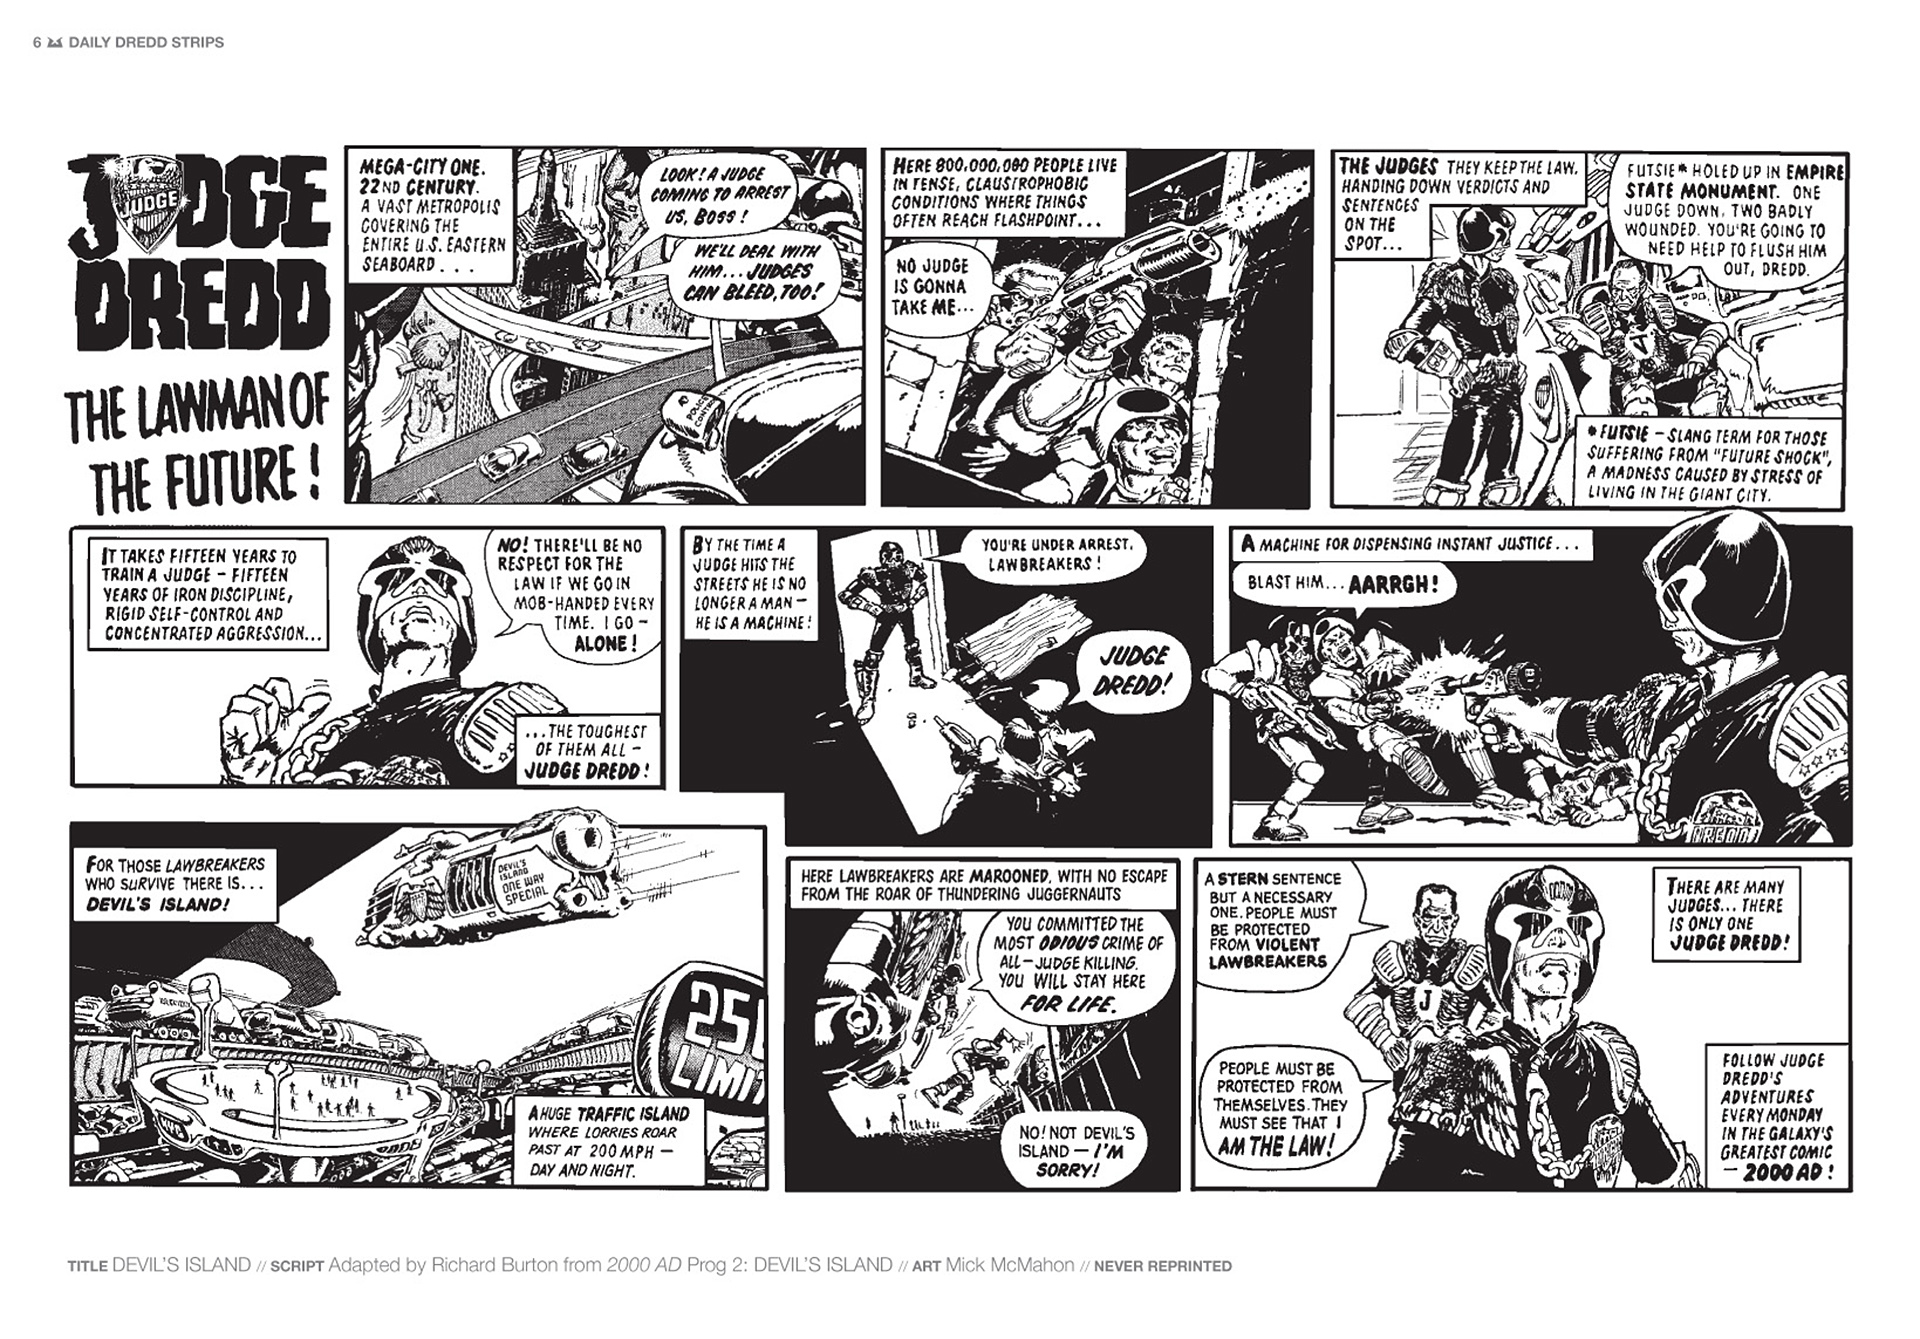 Read online Judge Dredd: The Daily Dredds comic -  Issue # TPB 1 - 9